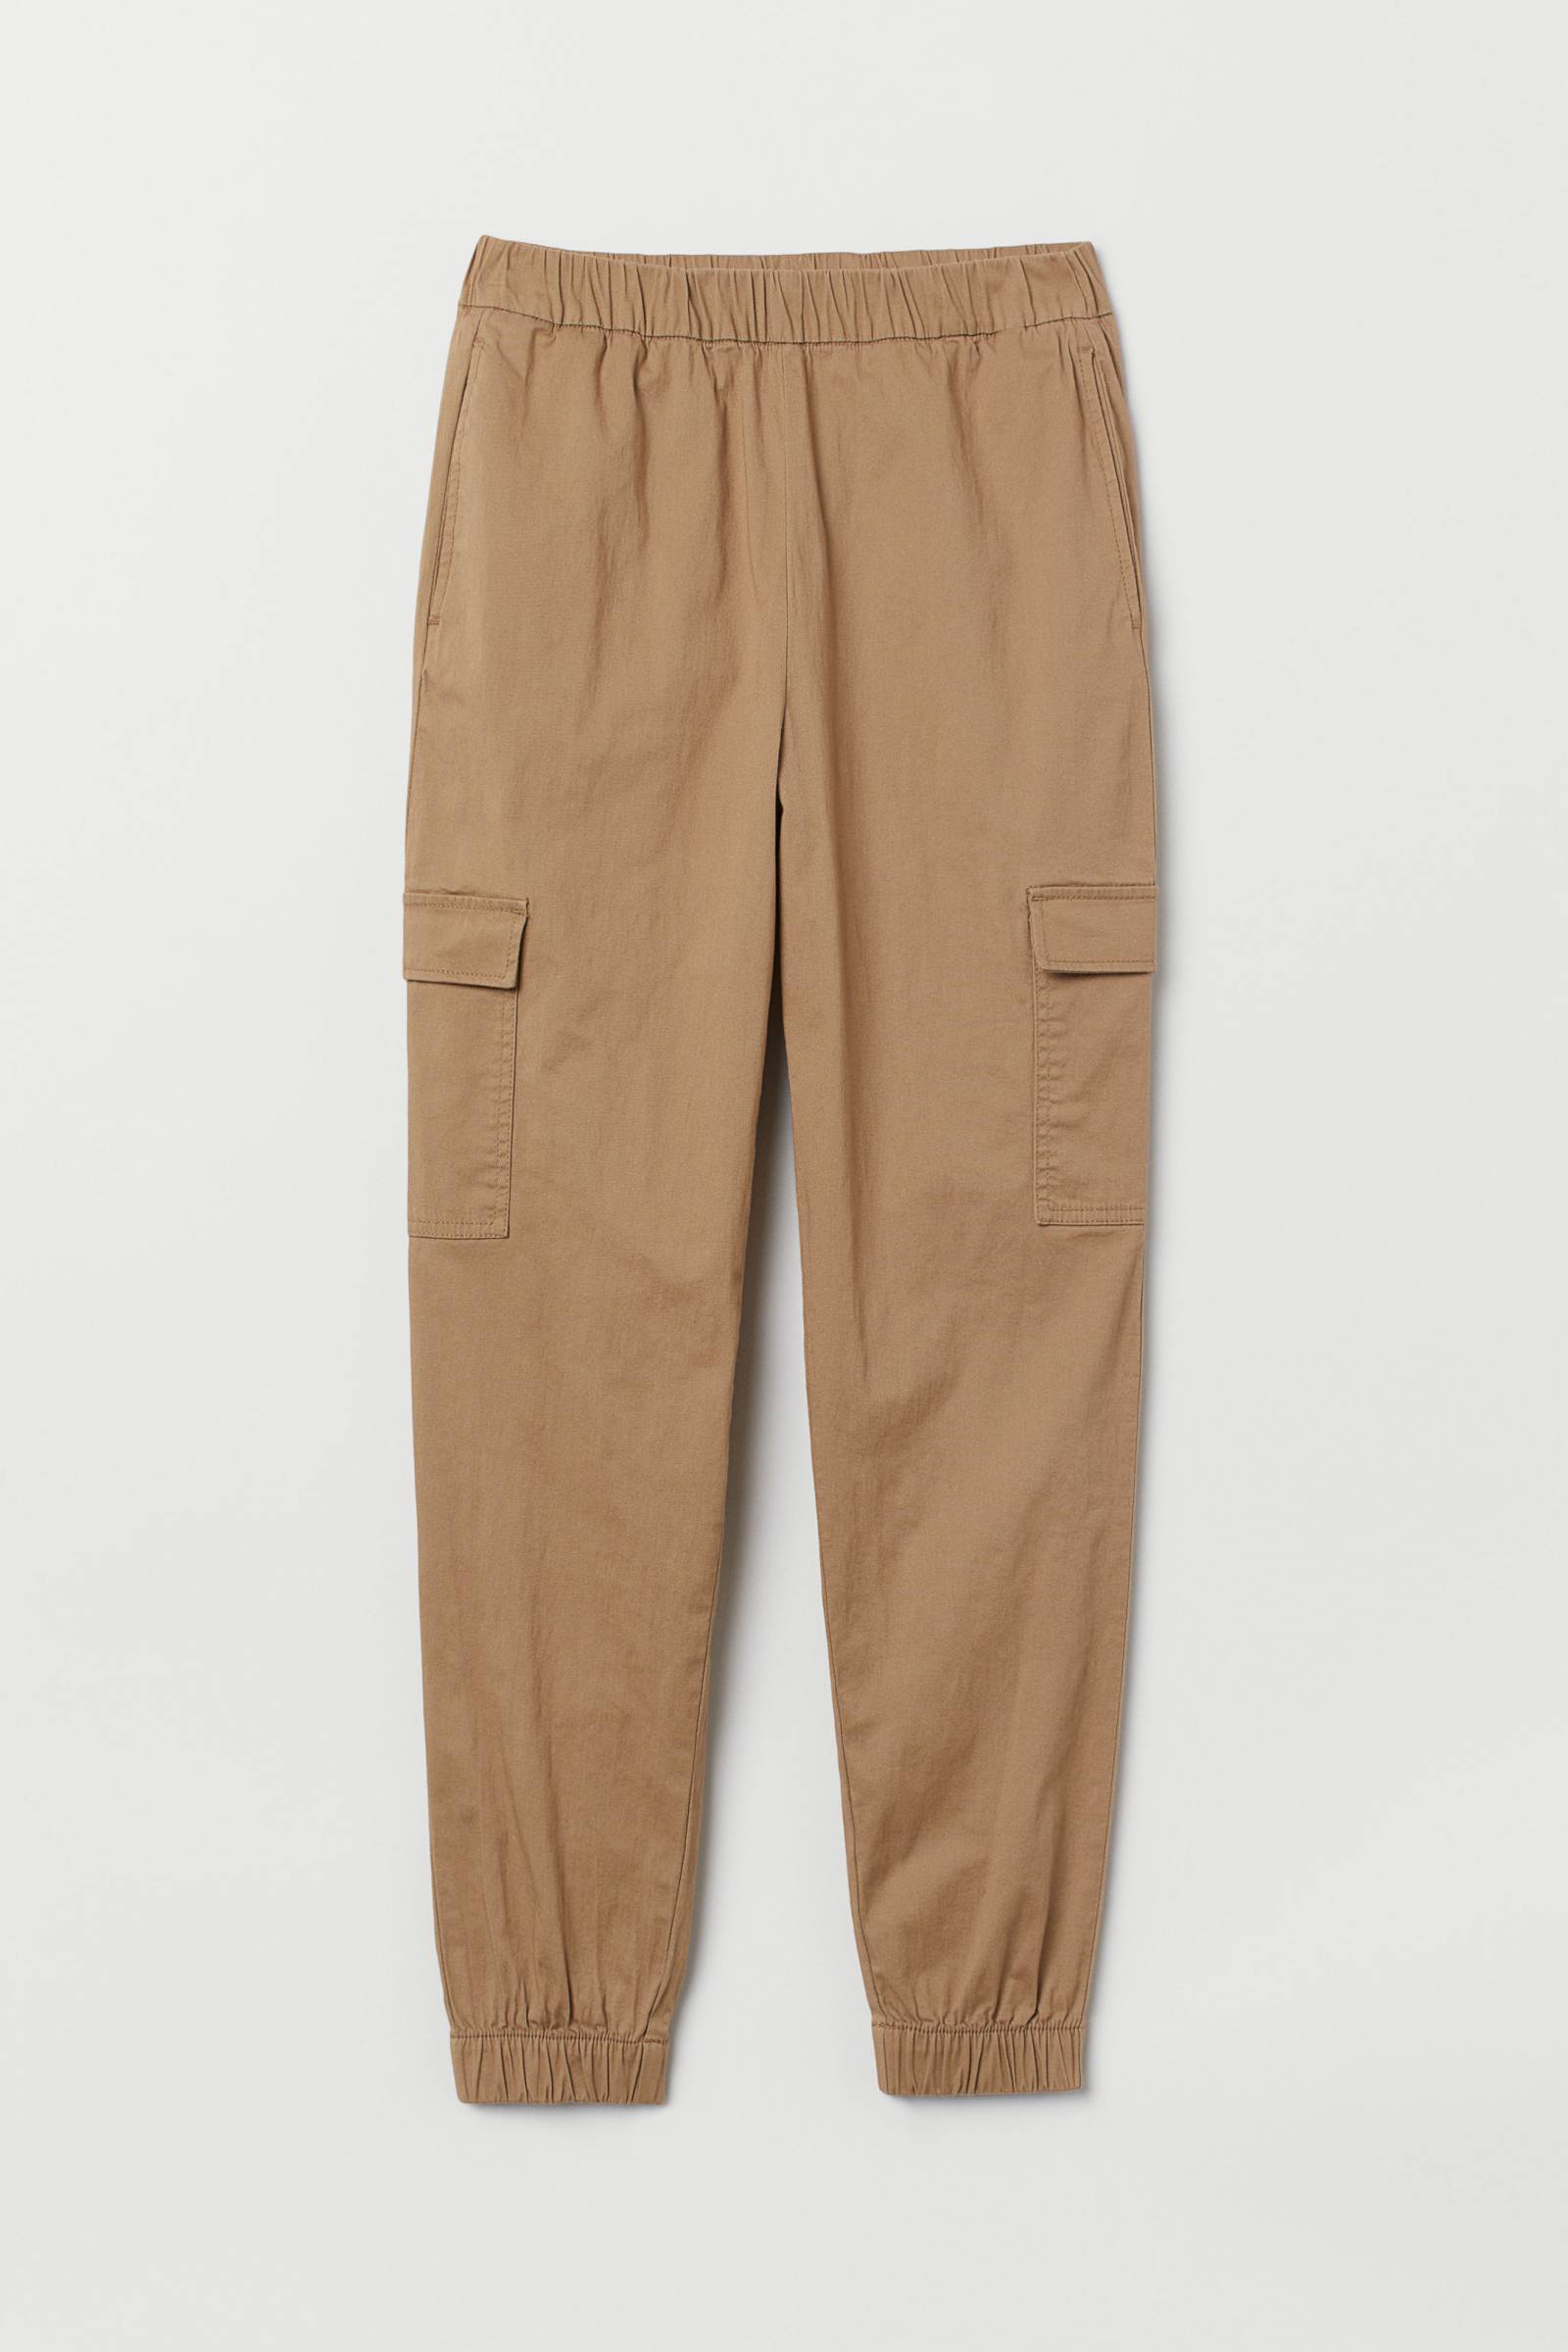 Spodnie H&M, cena 79,99 zł (Fot. materiały prasowe)